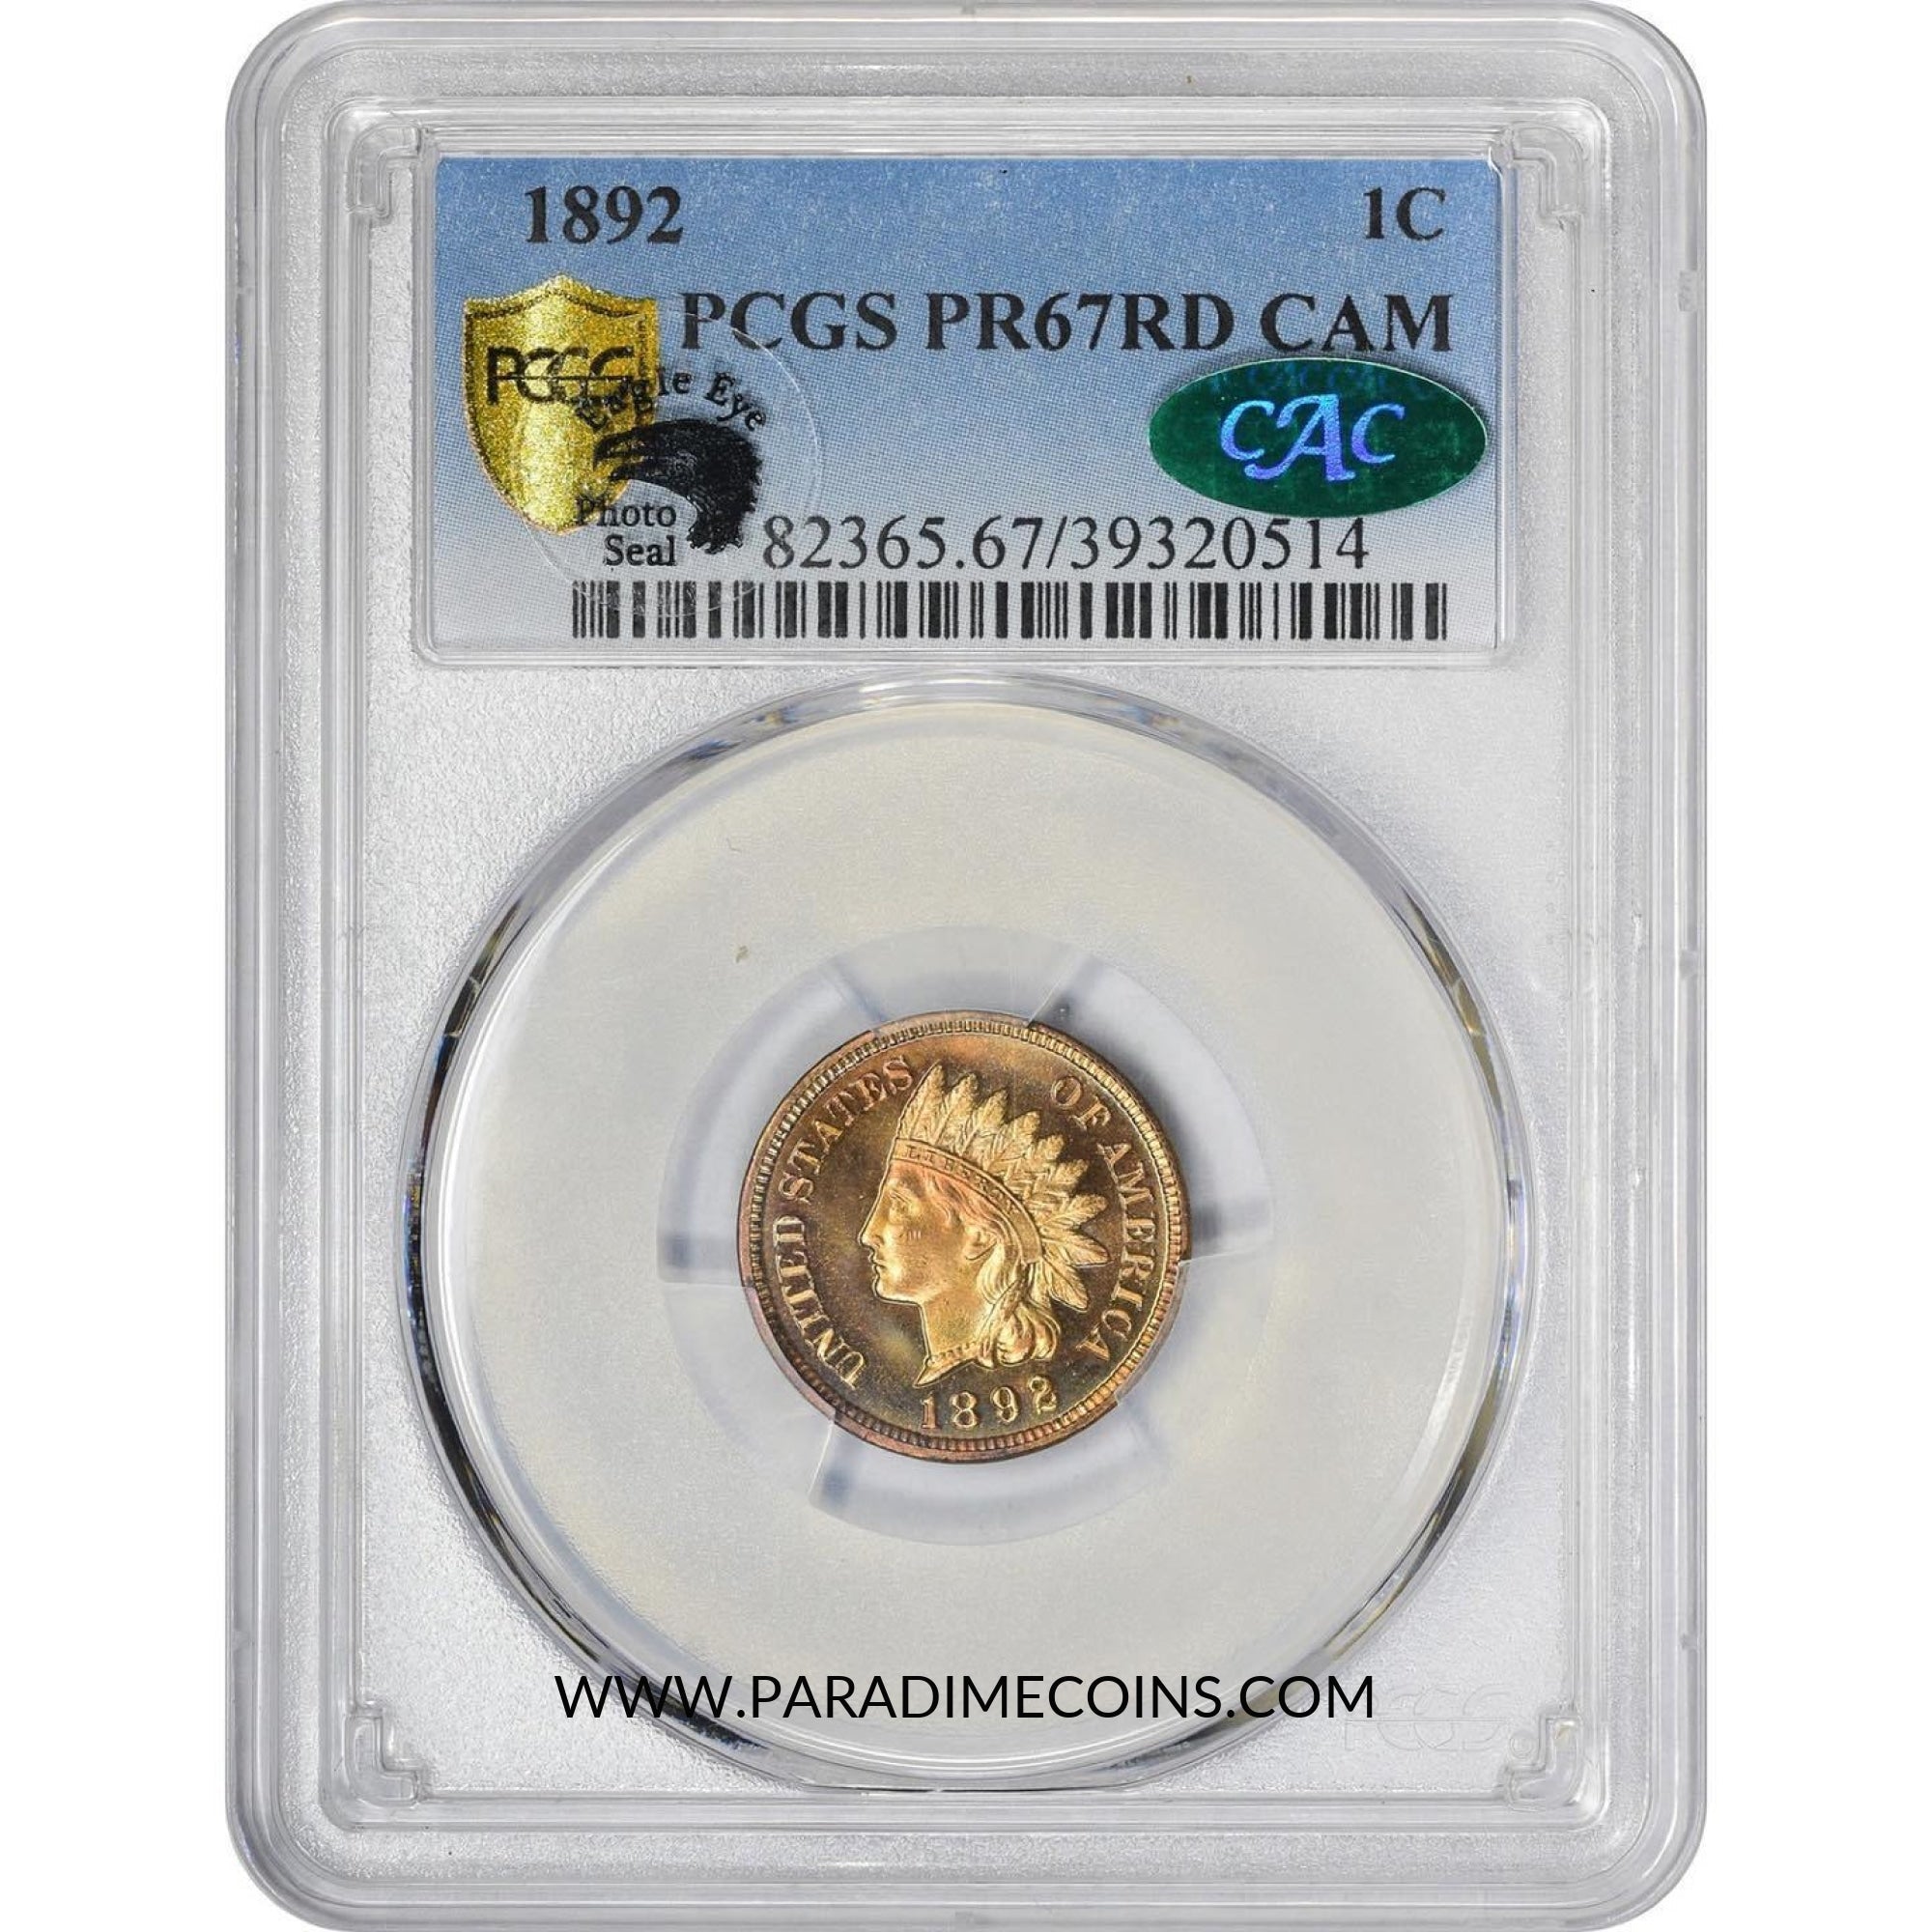 1892 1C PR67 RD CAMEO PCGS CAC PHOTO SEAL - Paradime Coins | PCGS NGC CACG CAC Rare US Numismatic Coins For Sale